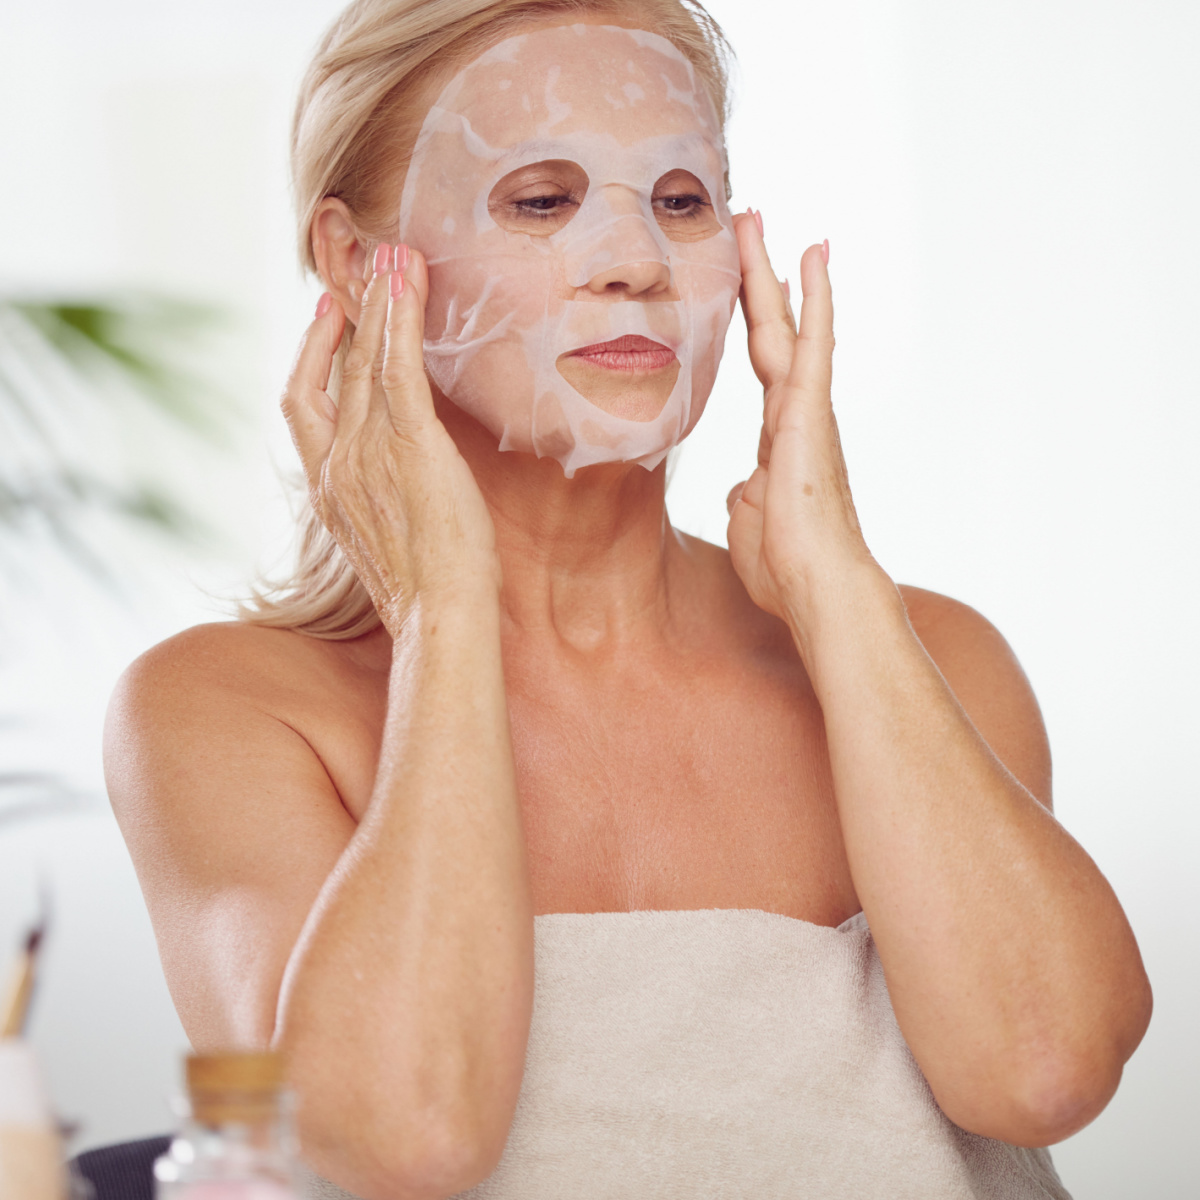 woman-applying-face-mask